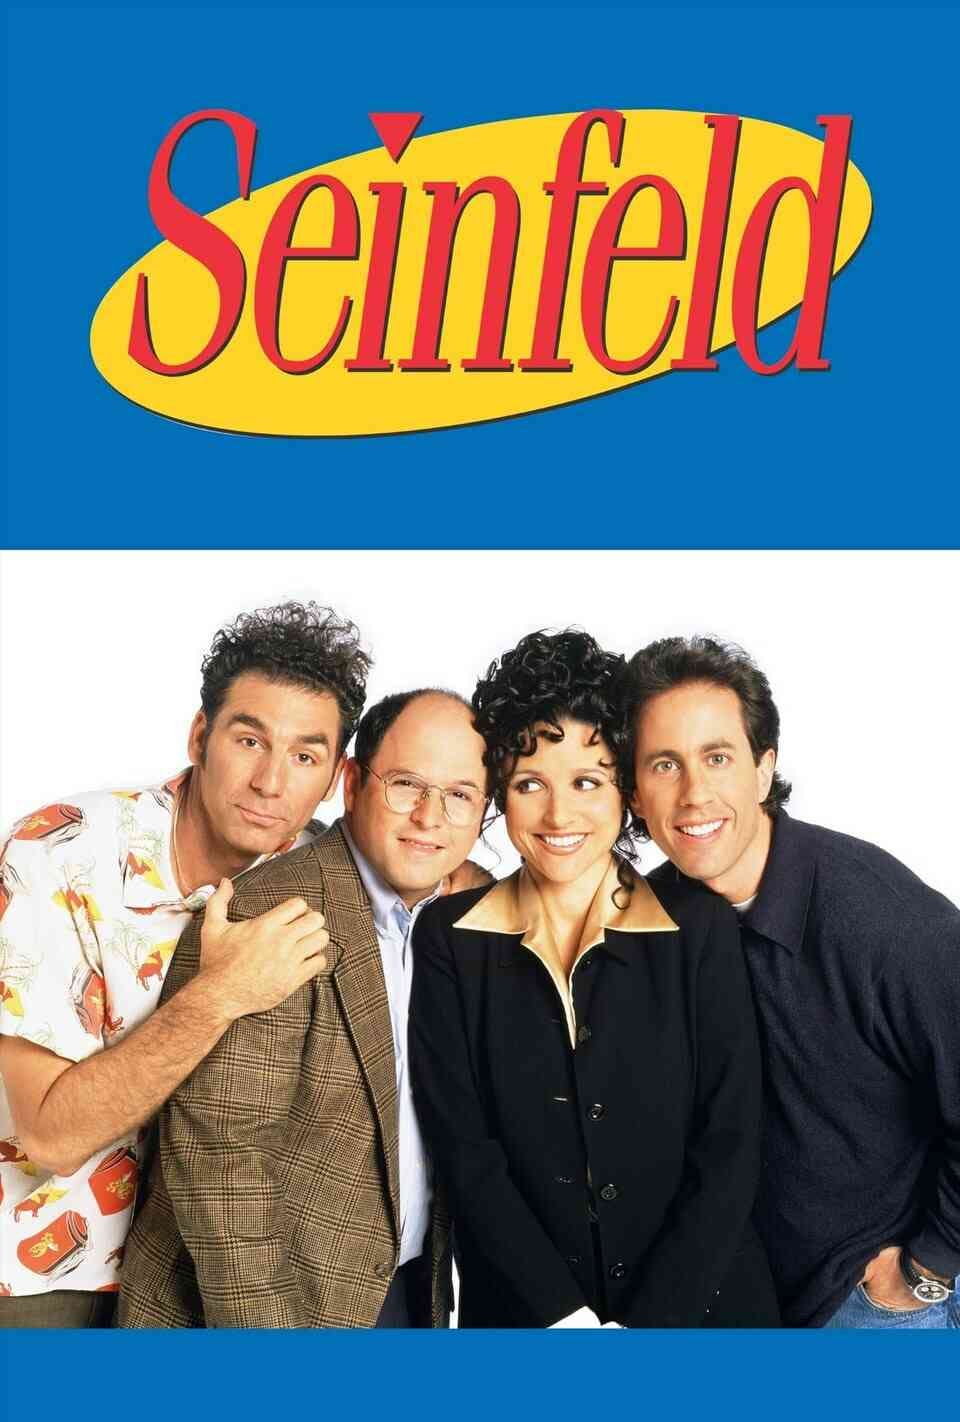 Read Seinfeld screenplay.